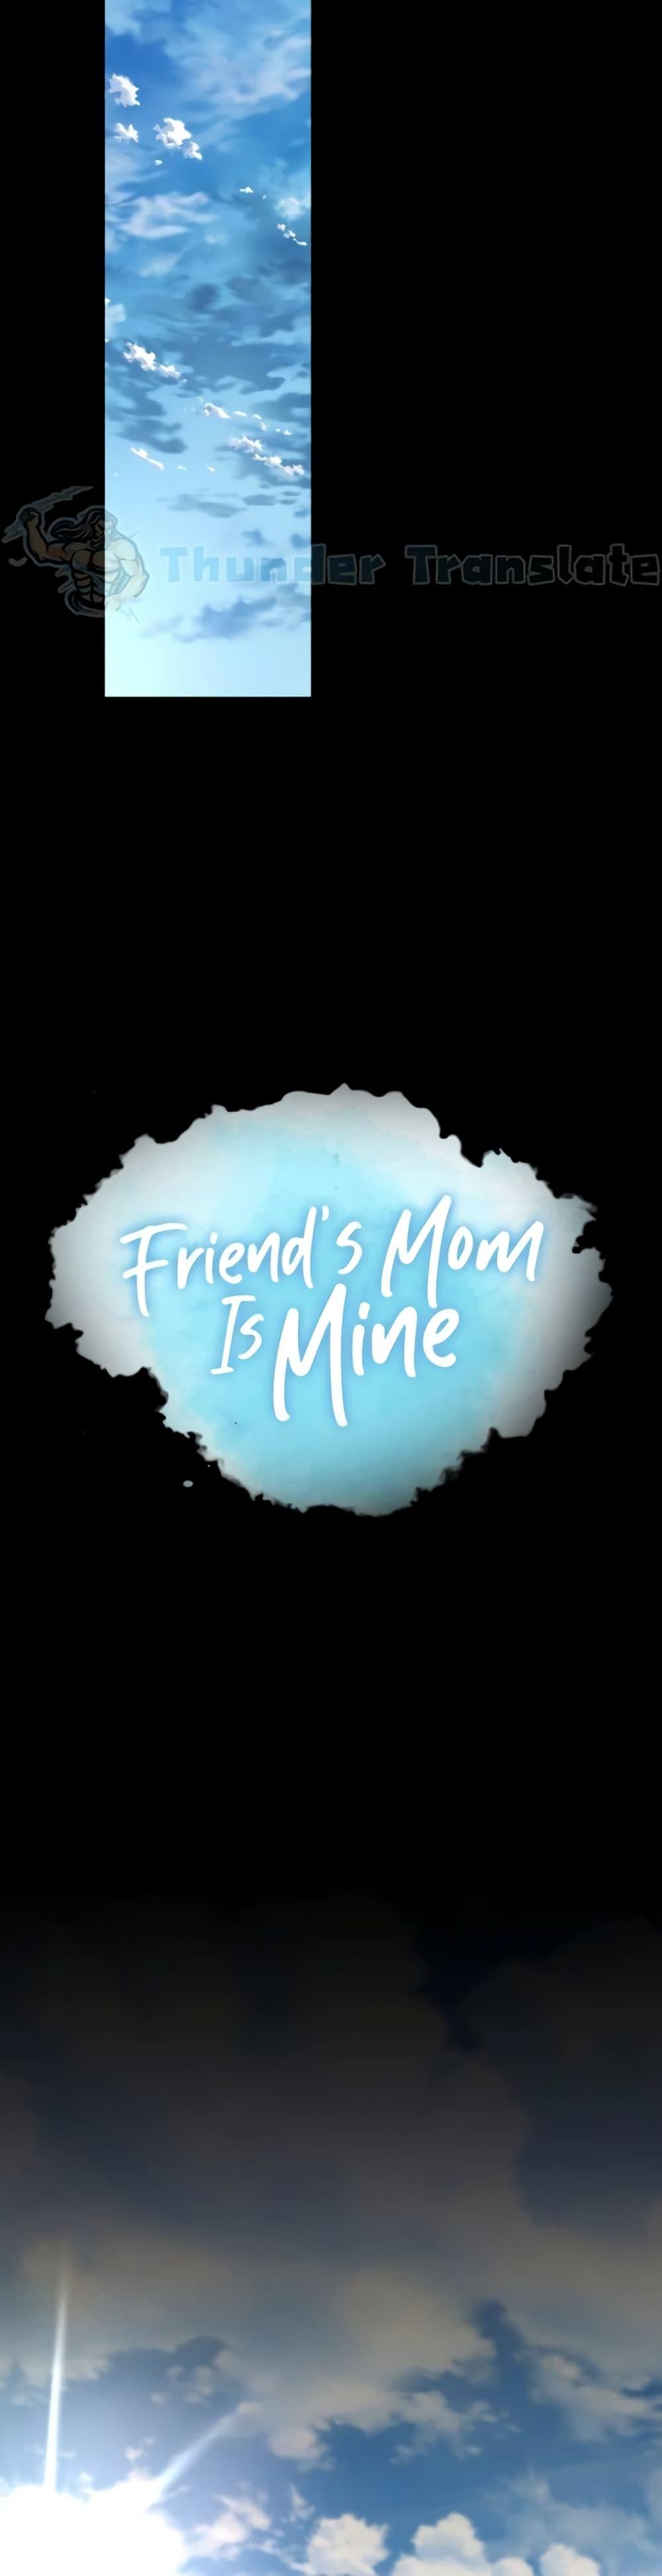 Friend’s Mom Is Mine 7 05